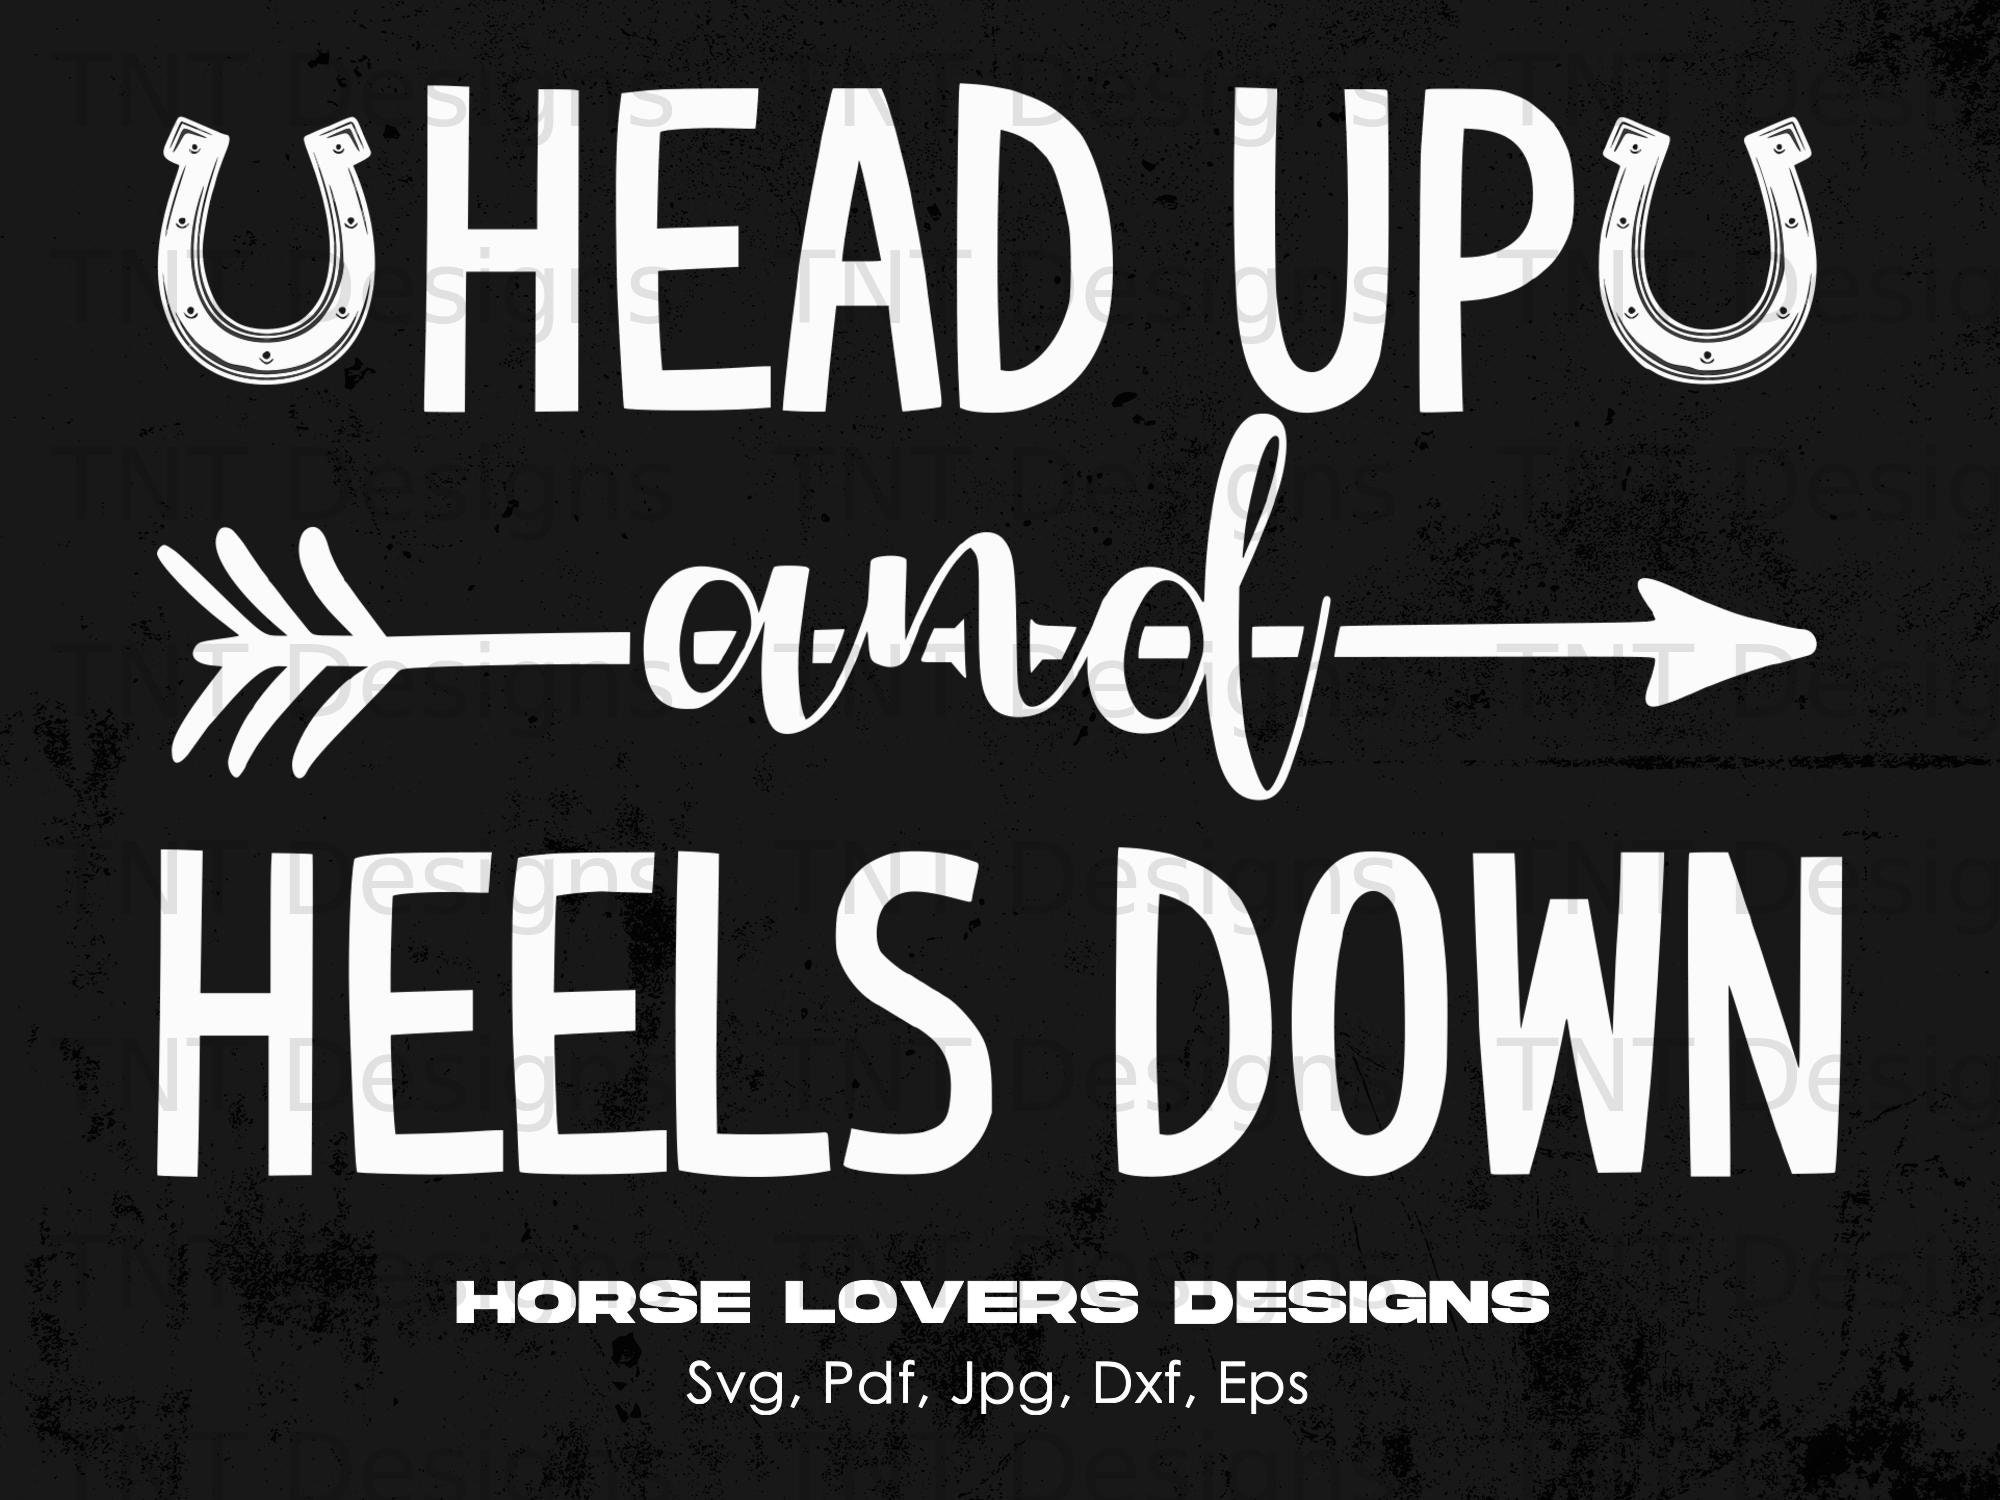 Woman Riding Horse - Head up and heels down Shirt, Hoodie, Sweatshirt -  FridayStuff